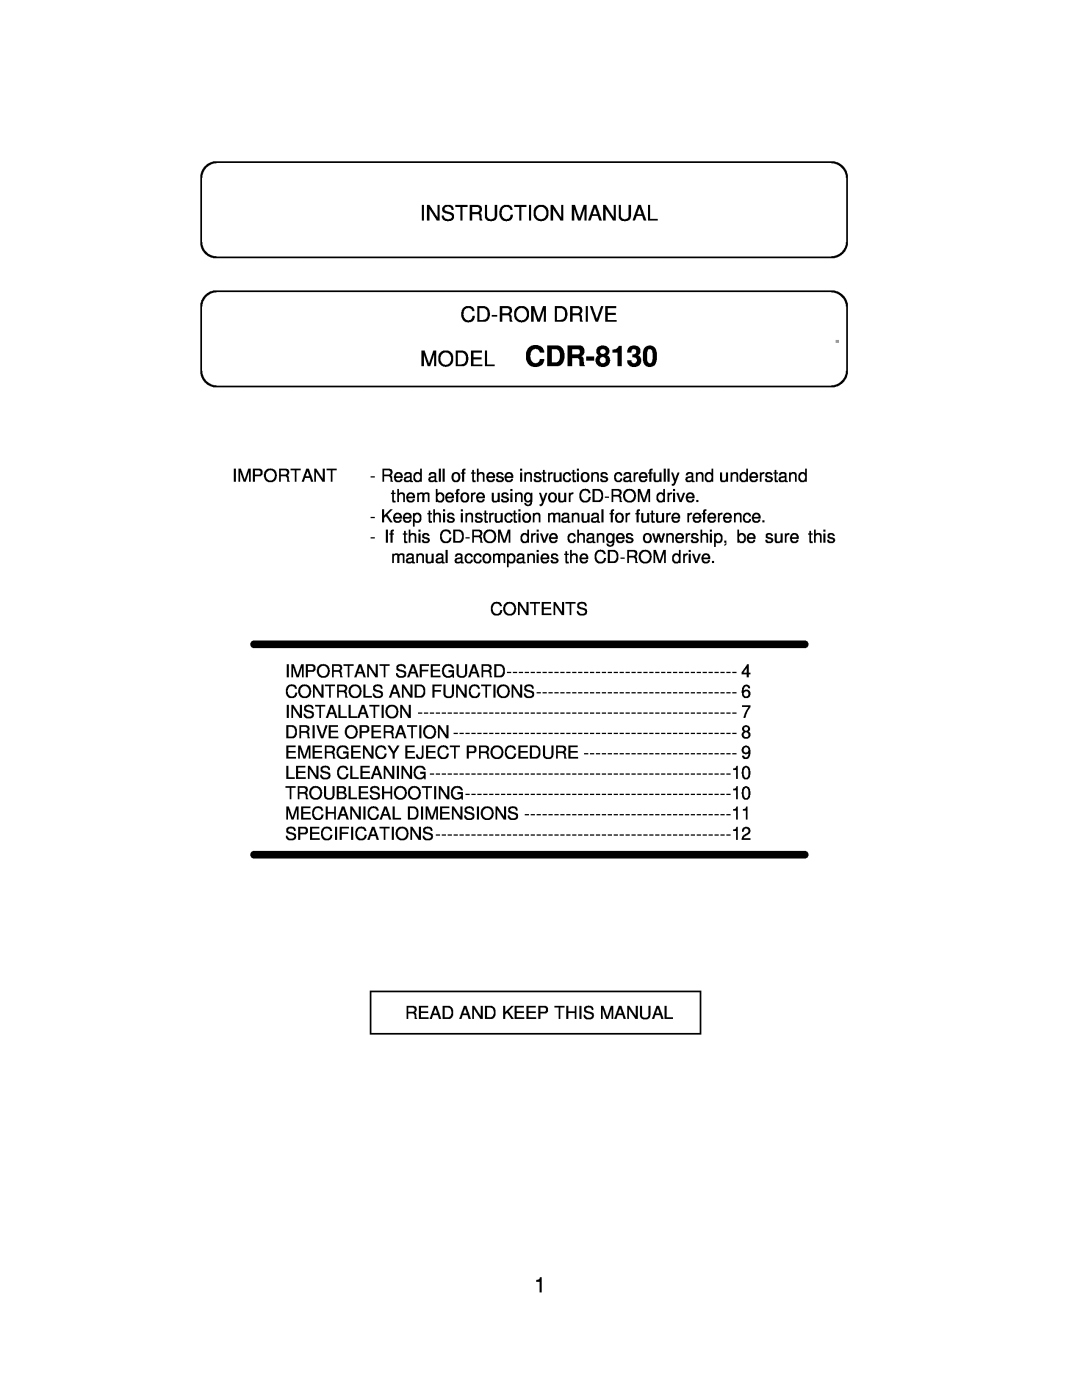 Hitachi instruction manual MODEL CDR-8130 